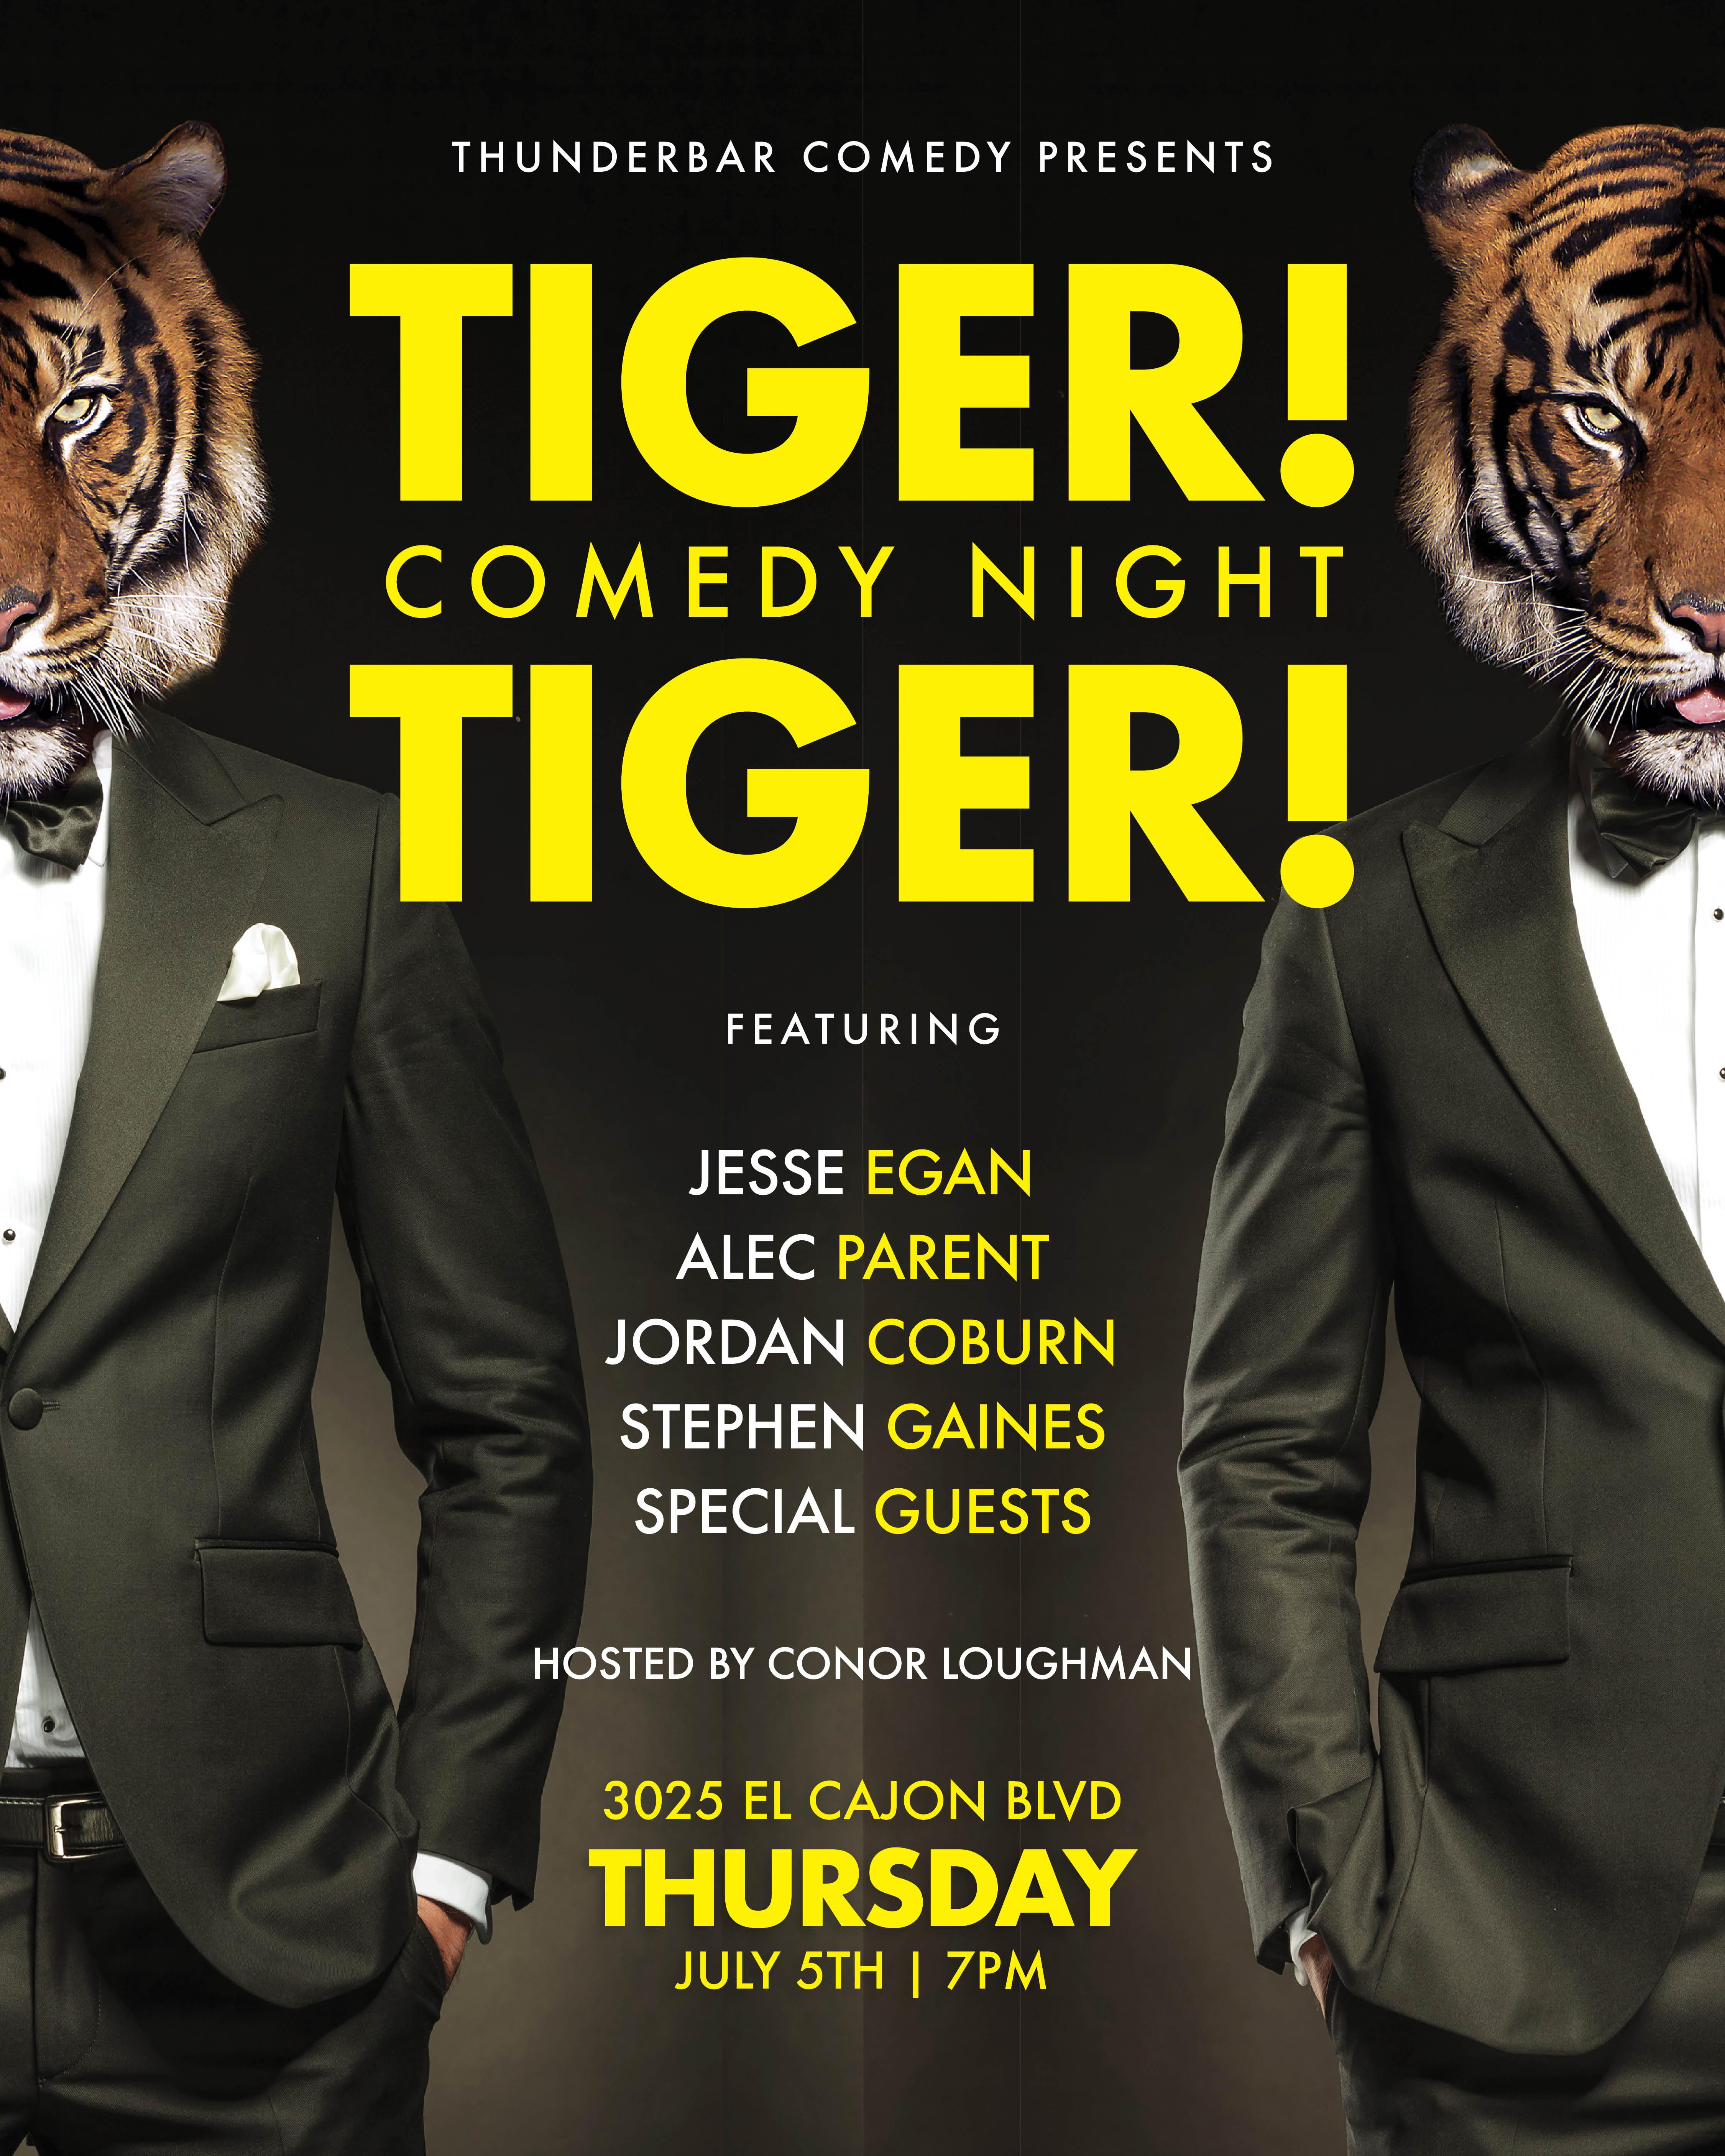 Comedy Night at Tiger! Tiger!